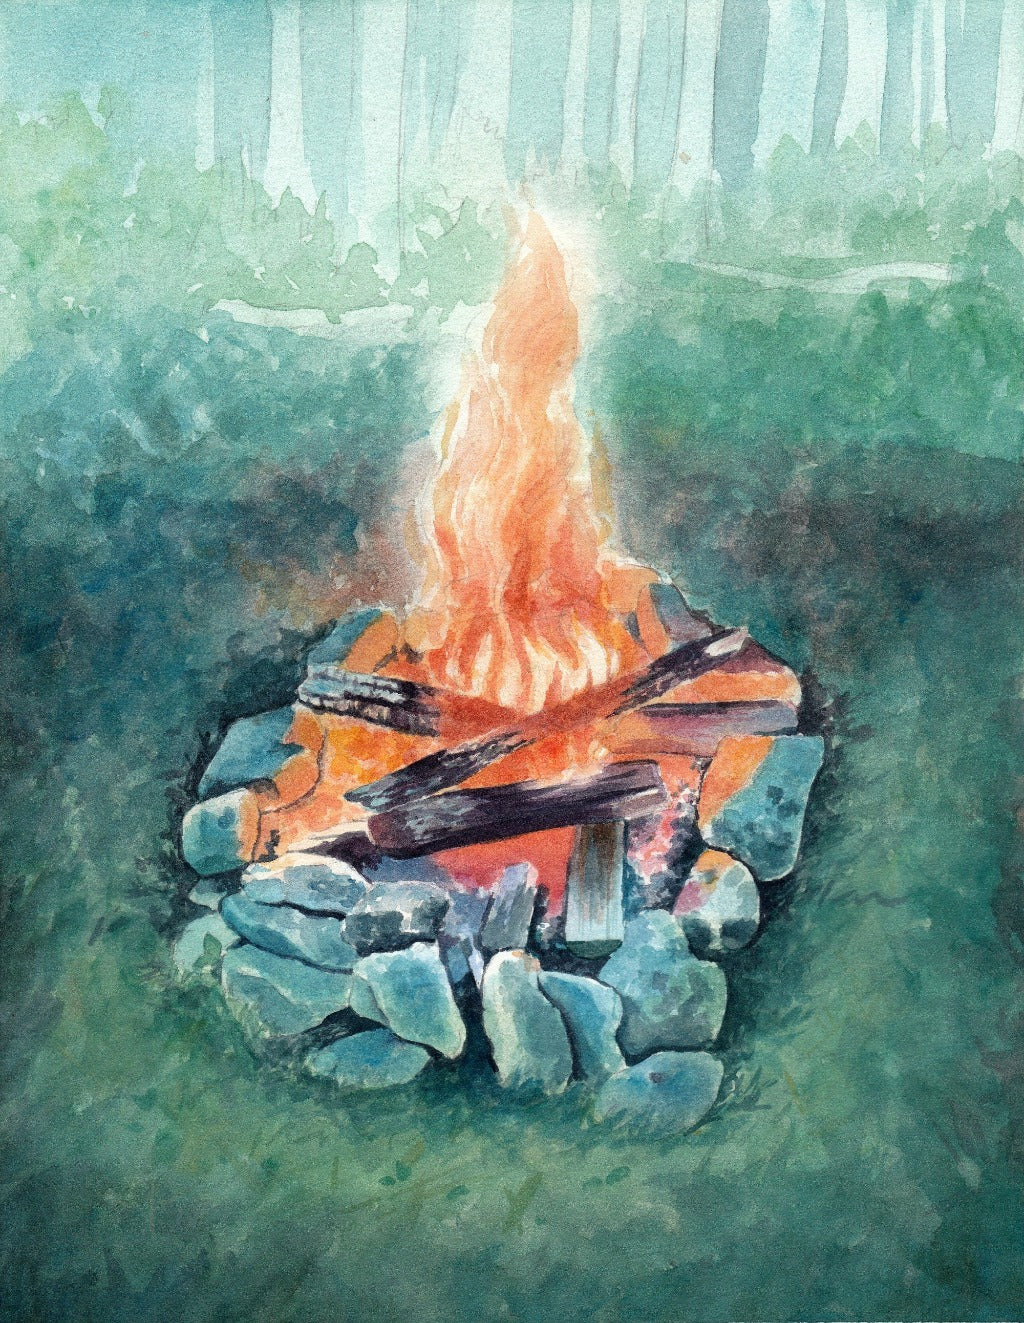 Warmth On A Cool Night - Original Painting - 8x10" - Kim Everhard Art